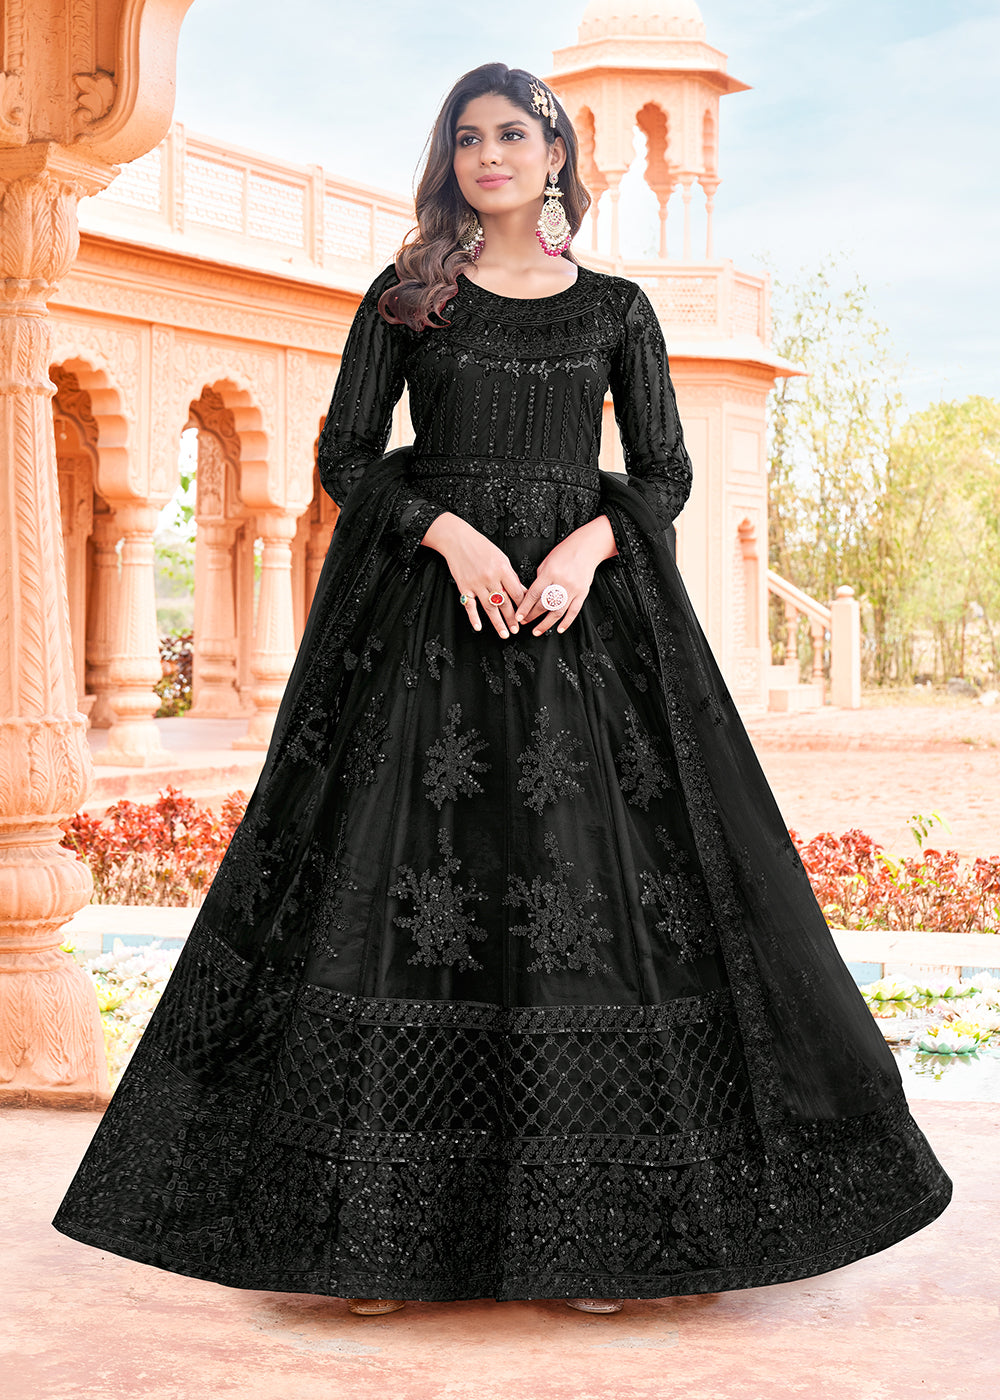 Buy Now Long Length Strange Black Embroidered Net Anarkali Suit Online in USA, UK, Australia, New Zealand, Canada, Italy & Worldwide at Empress Clothing. 